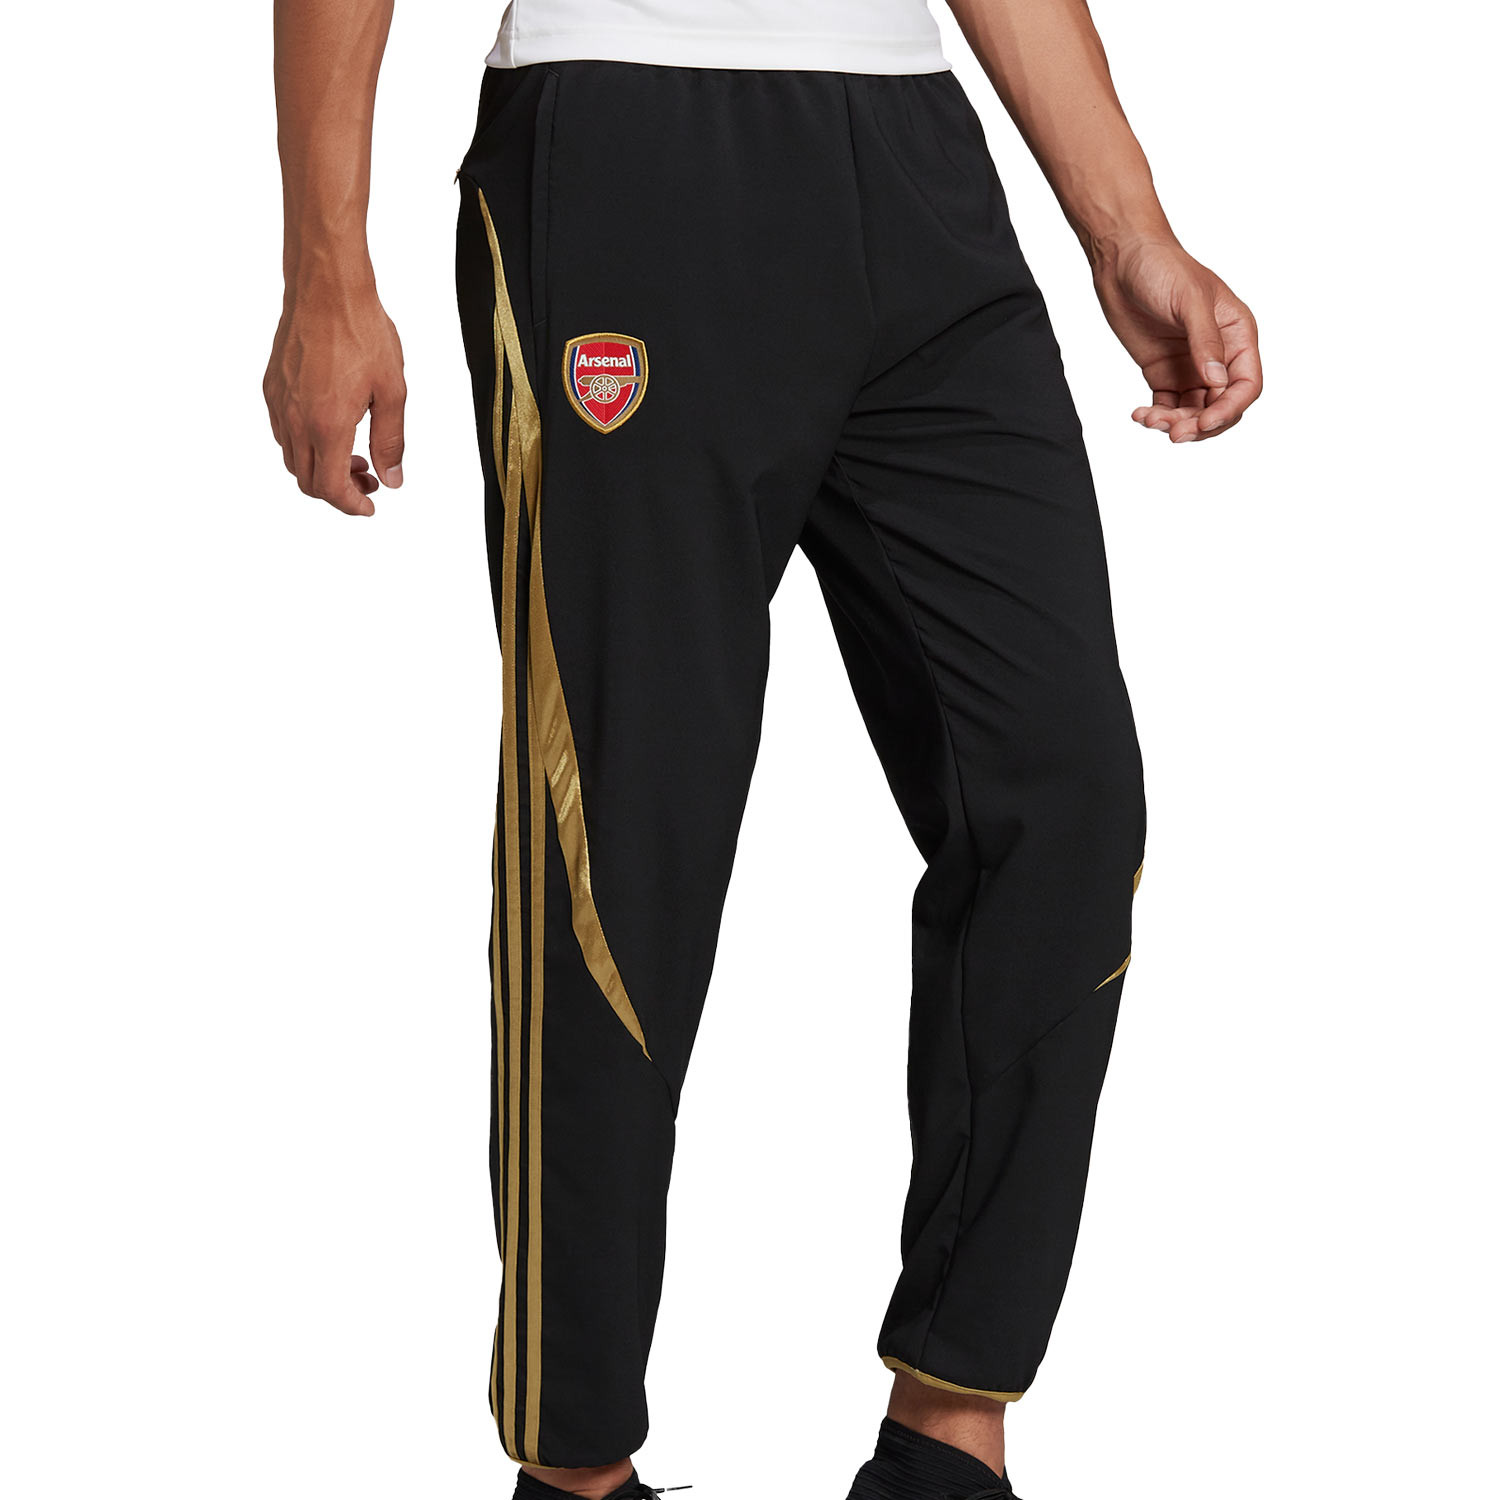 Pantalón adidas Arsenal TeamGeist negro dorado | futbolmania